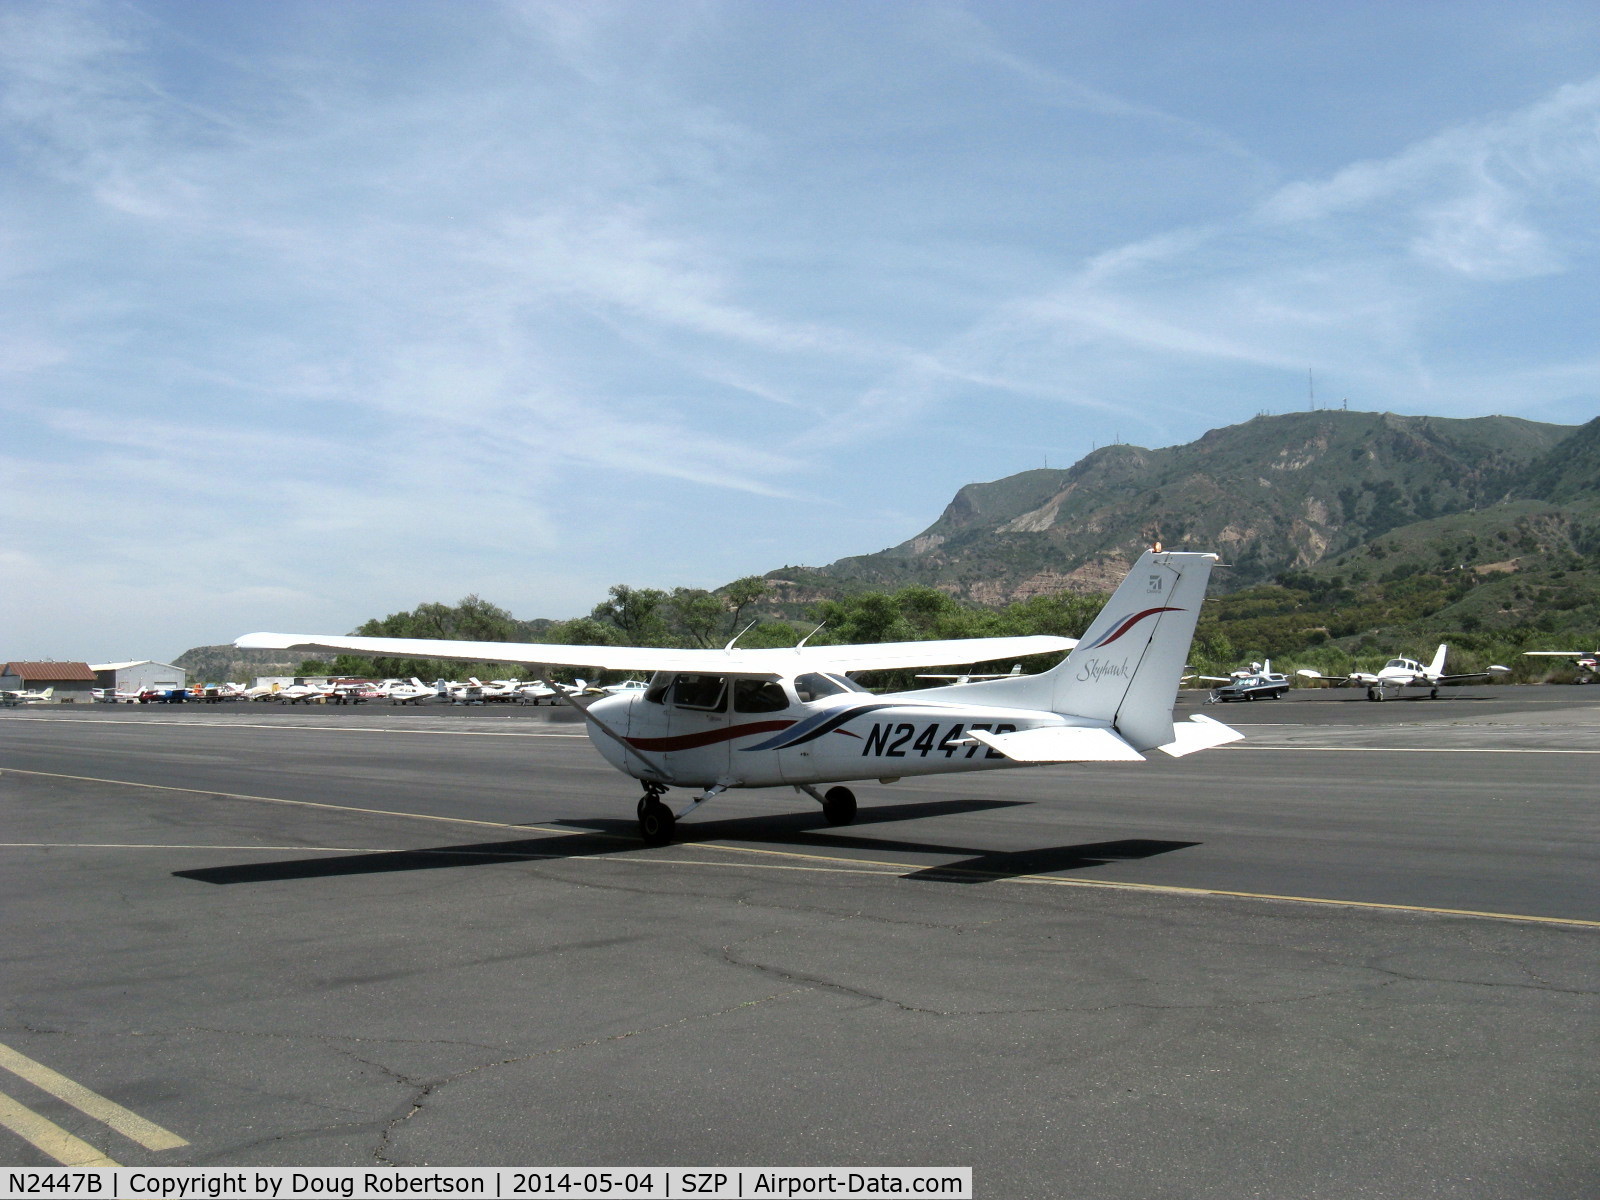 N2447B, 1999 Cessna 172R C/N 17280801, 1999 Cessna 172R SKYHAWK, Lycoming IO-320-L2A 160 Hp fixed-pitch prop, taxi